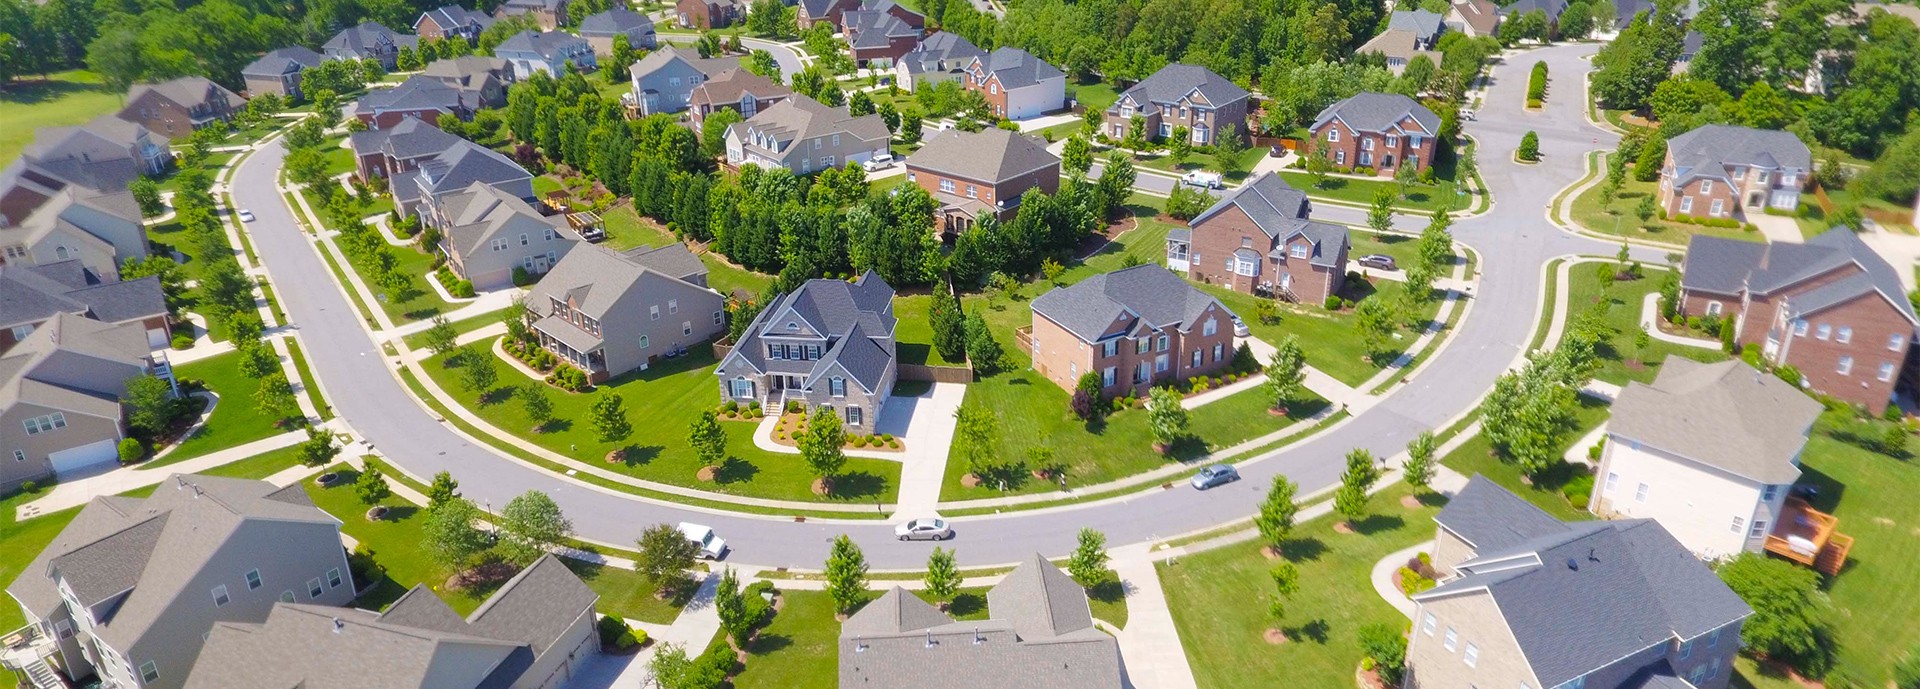 aerial shot of housing development site suburban street